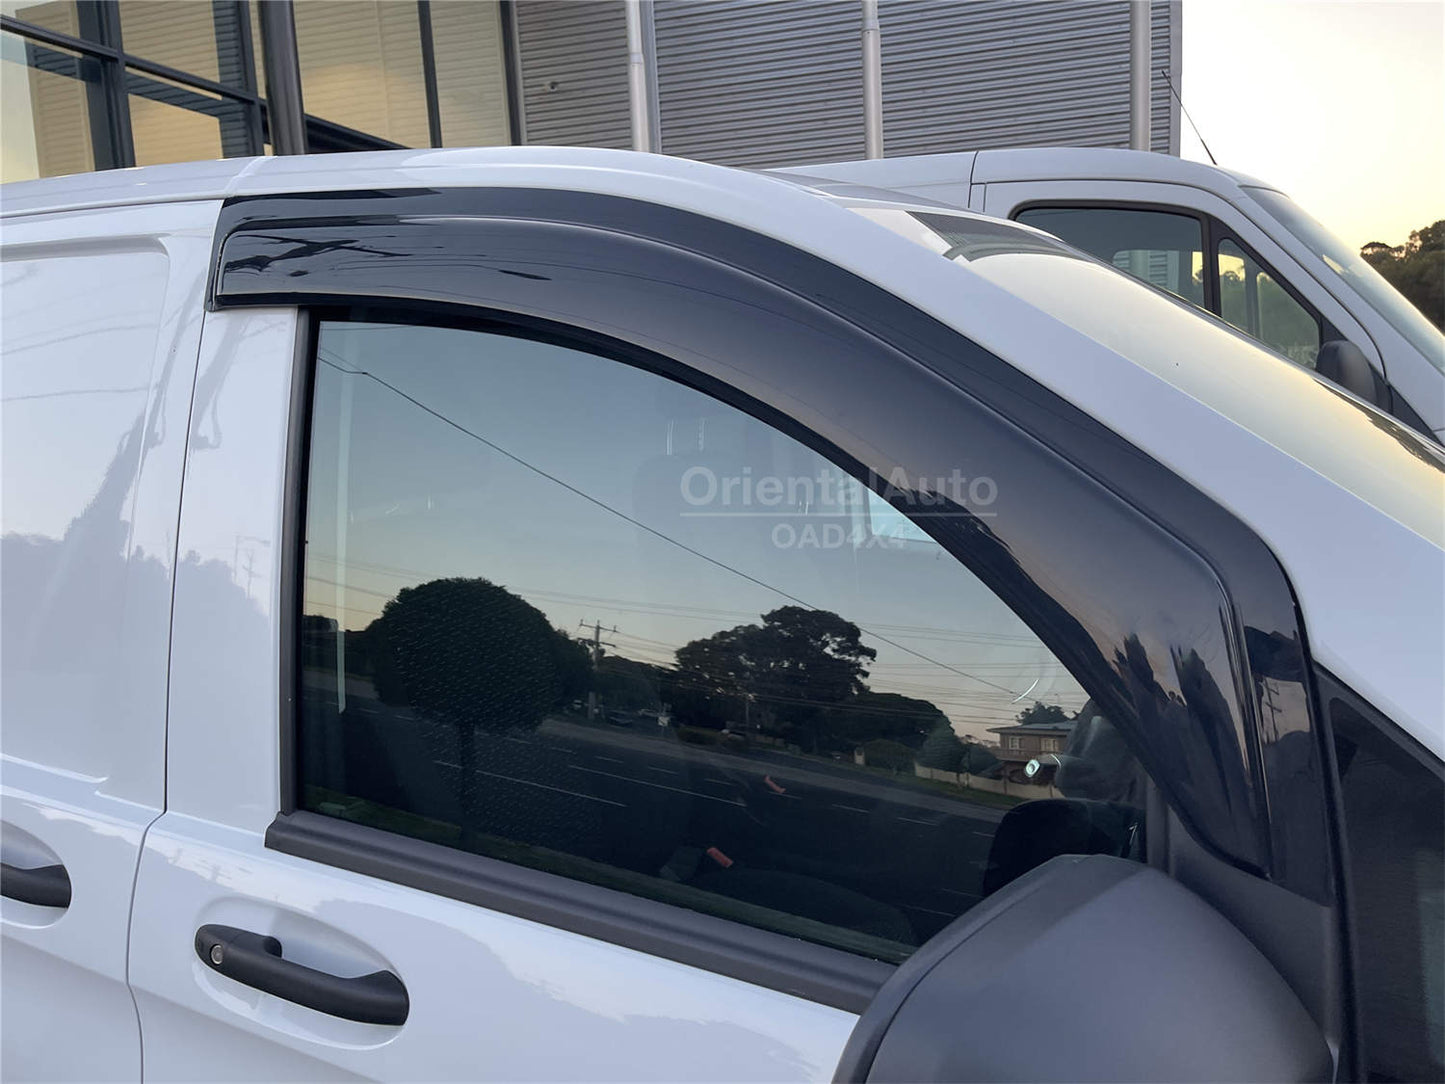 Luxury Weathershields for Mercedes-Benz V-class V250 V220 V300 2015+ 2pcs Weather Shields Window Visors